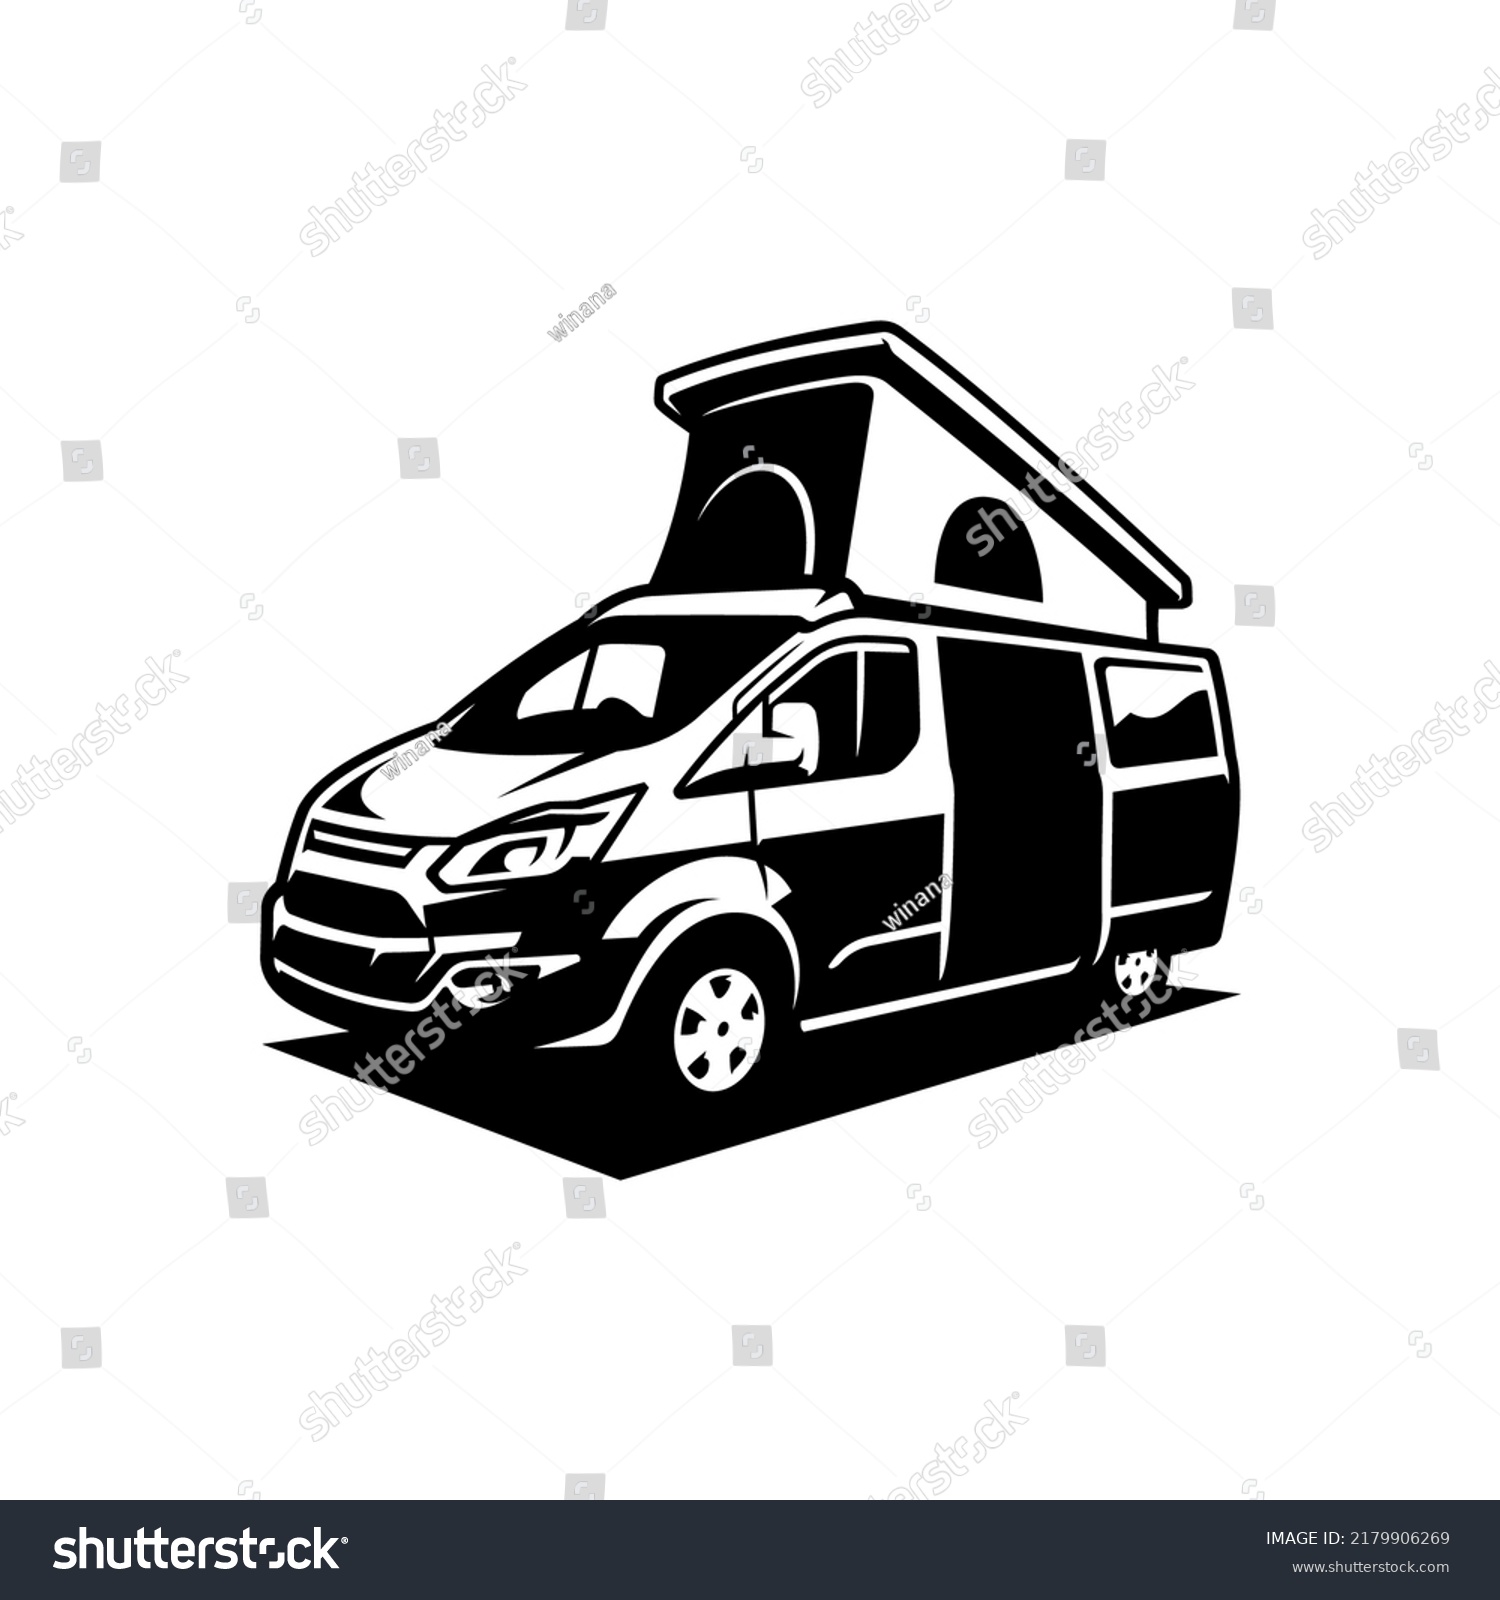 SVG of van car with pop up tent illustration vector svg